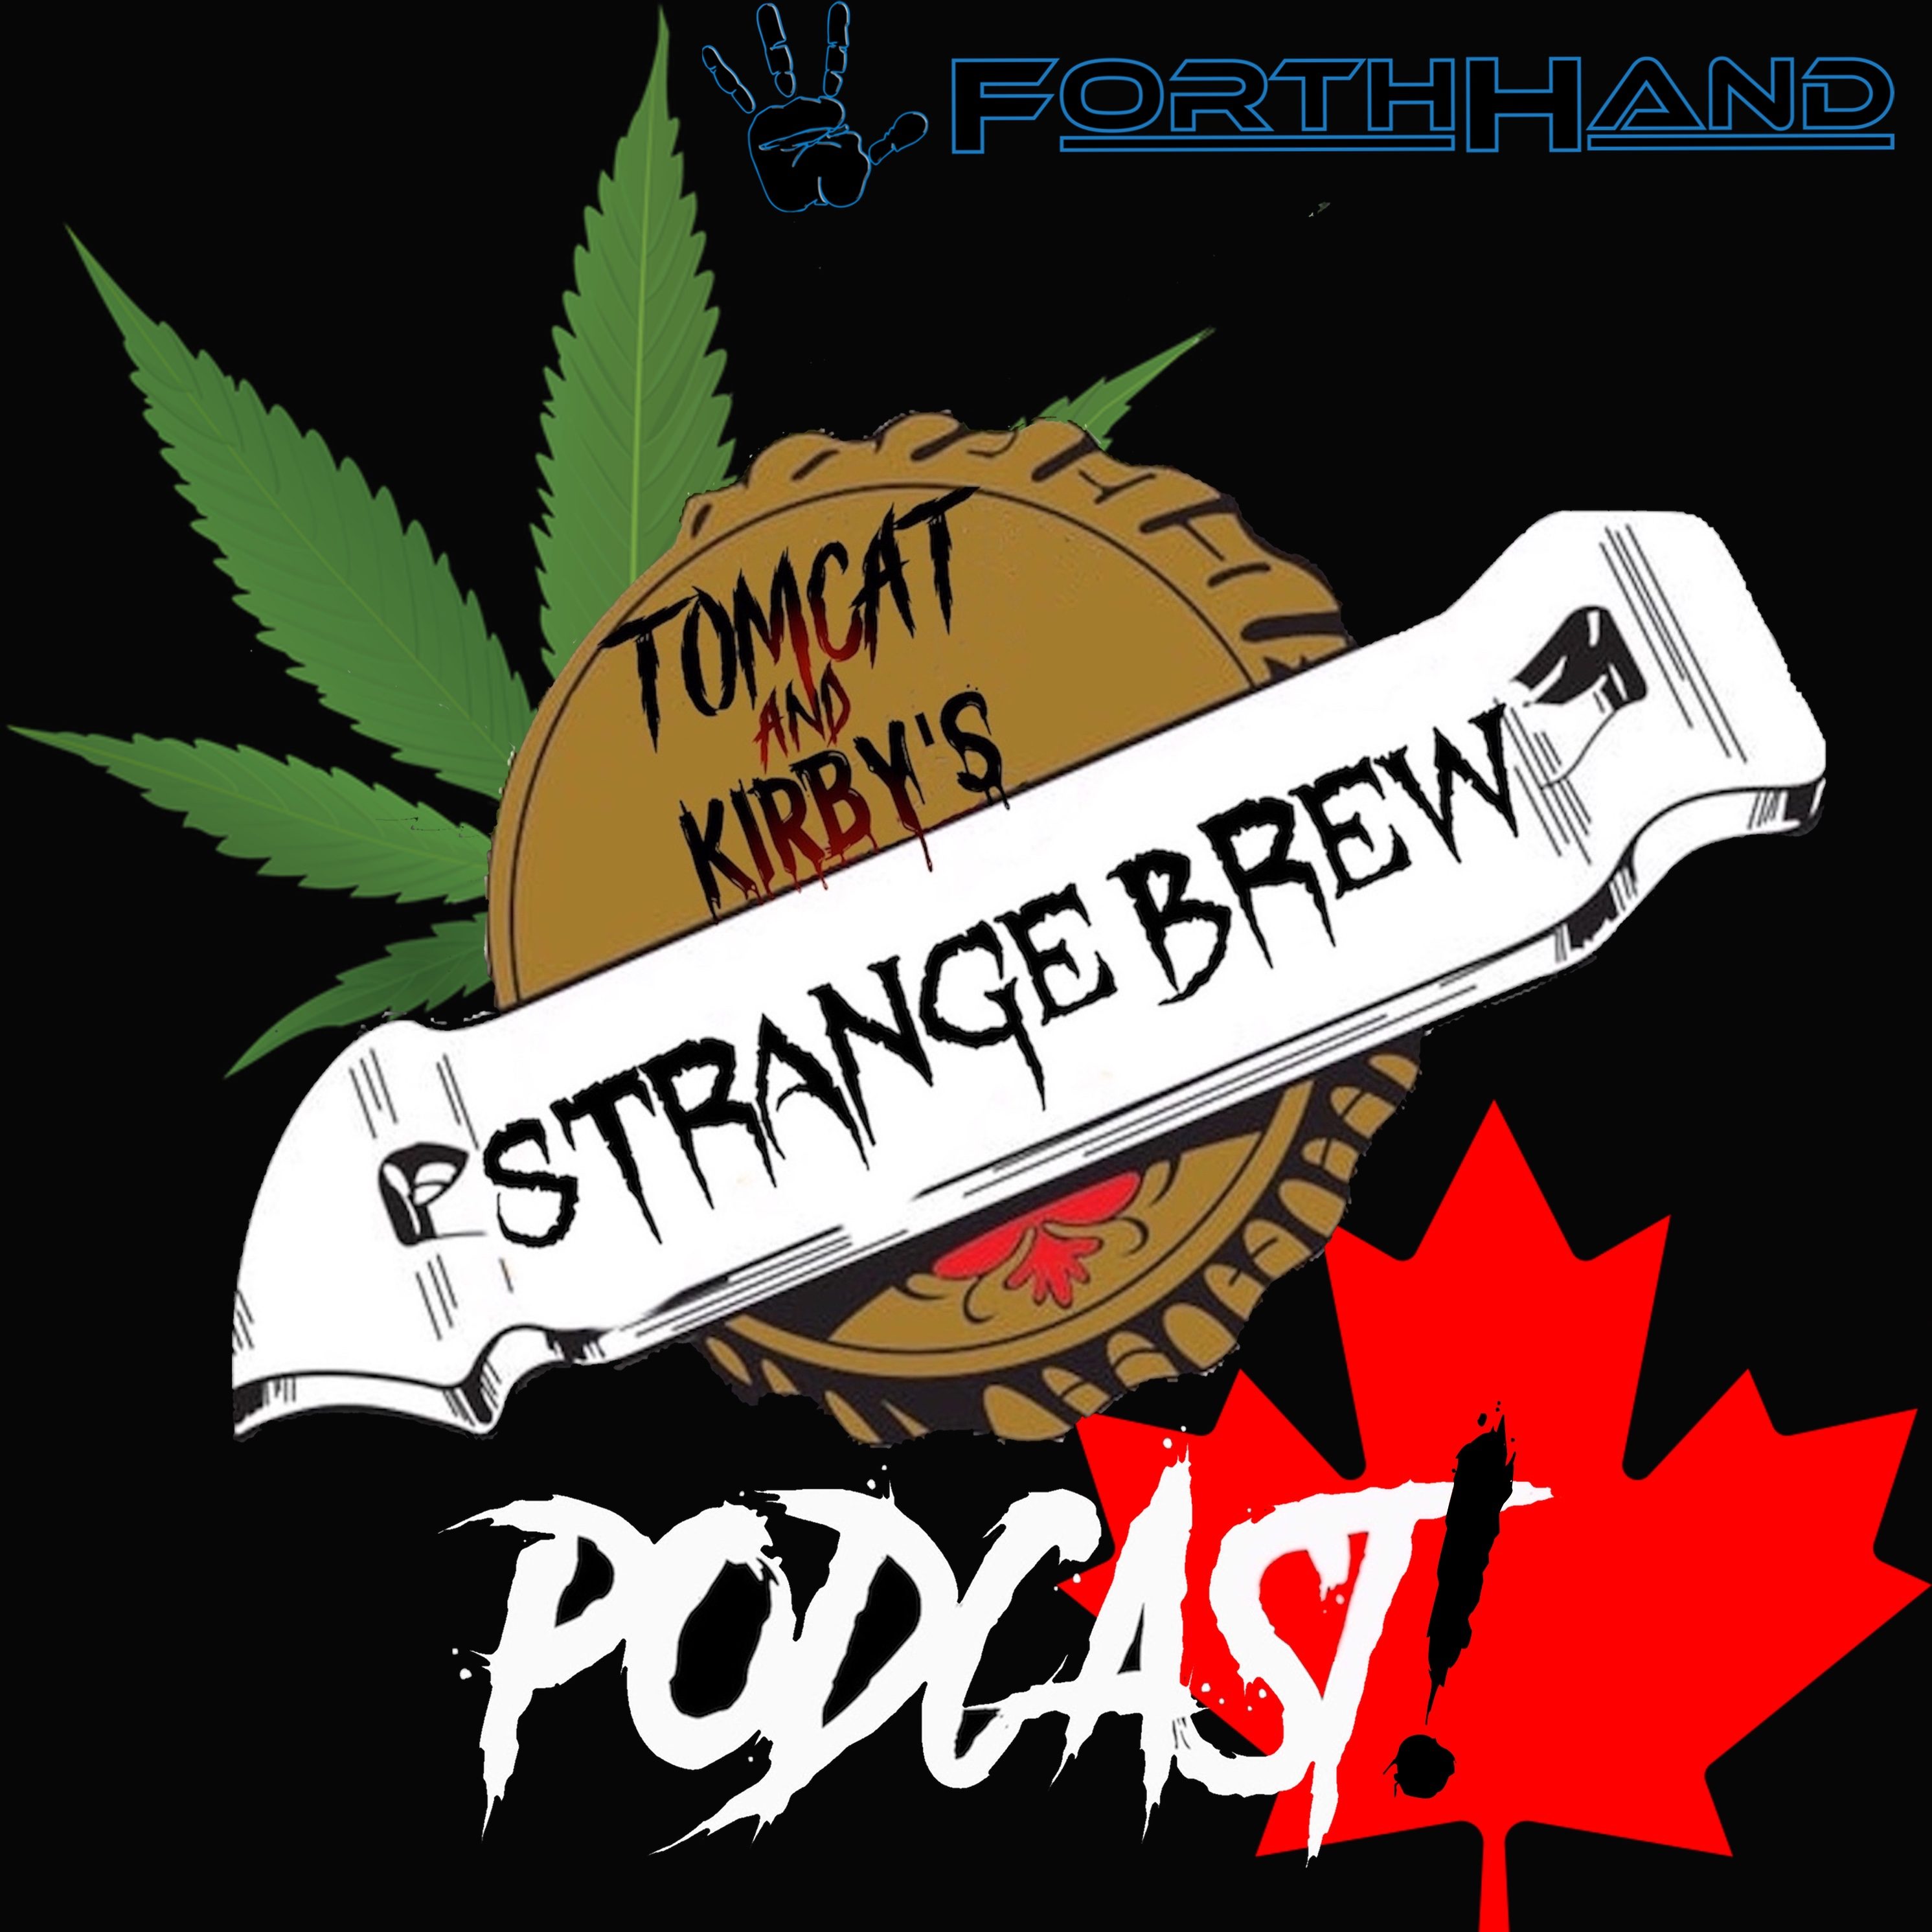 Strange brew podcast!